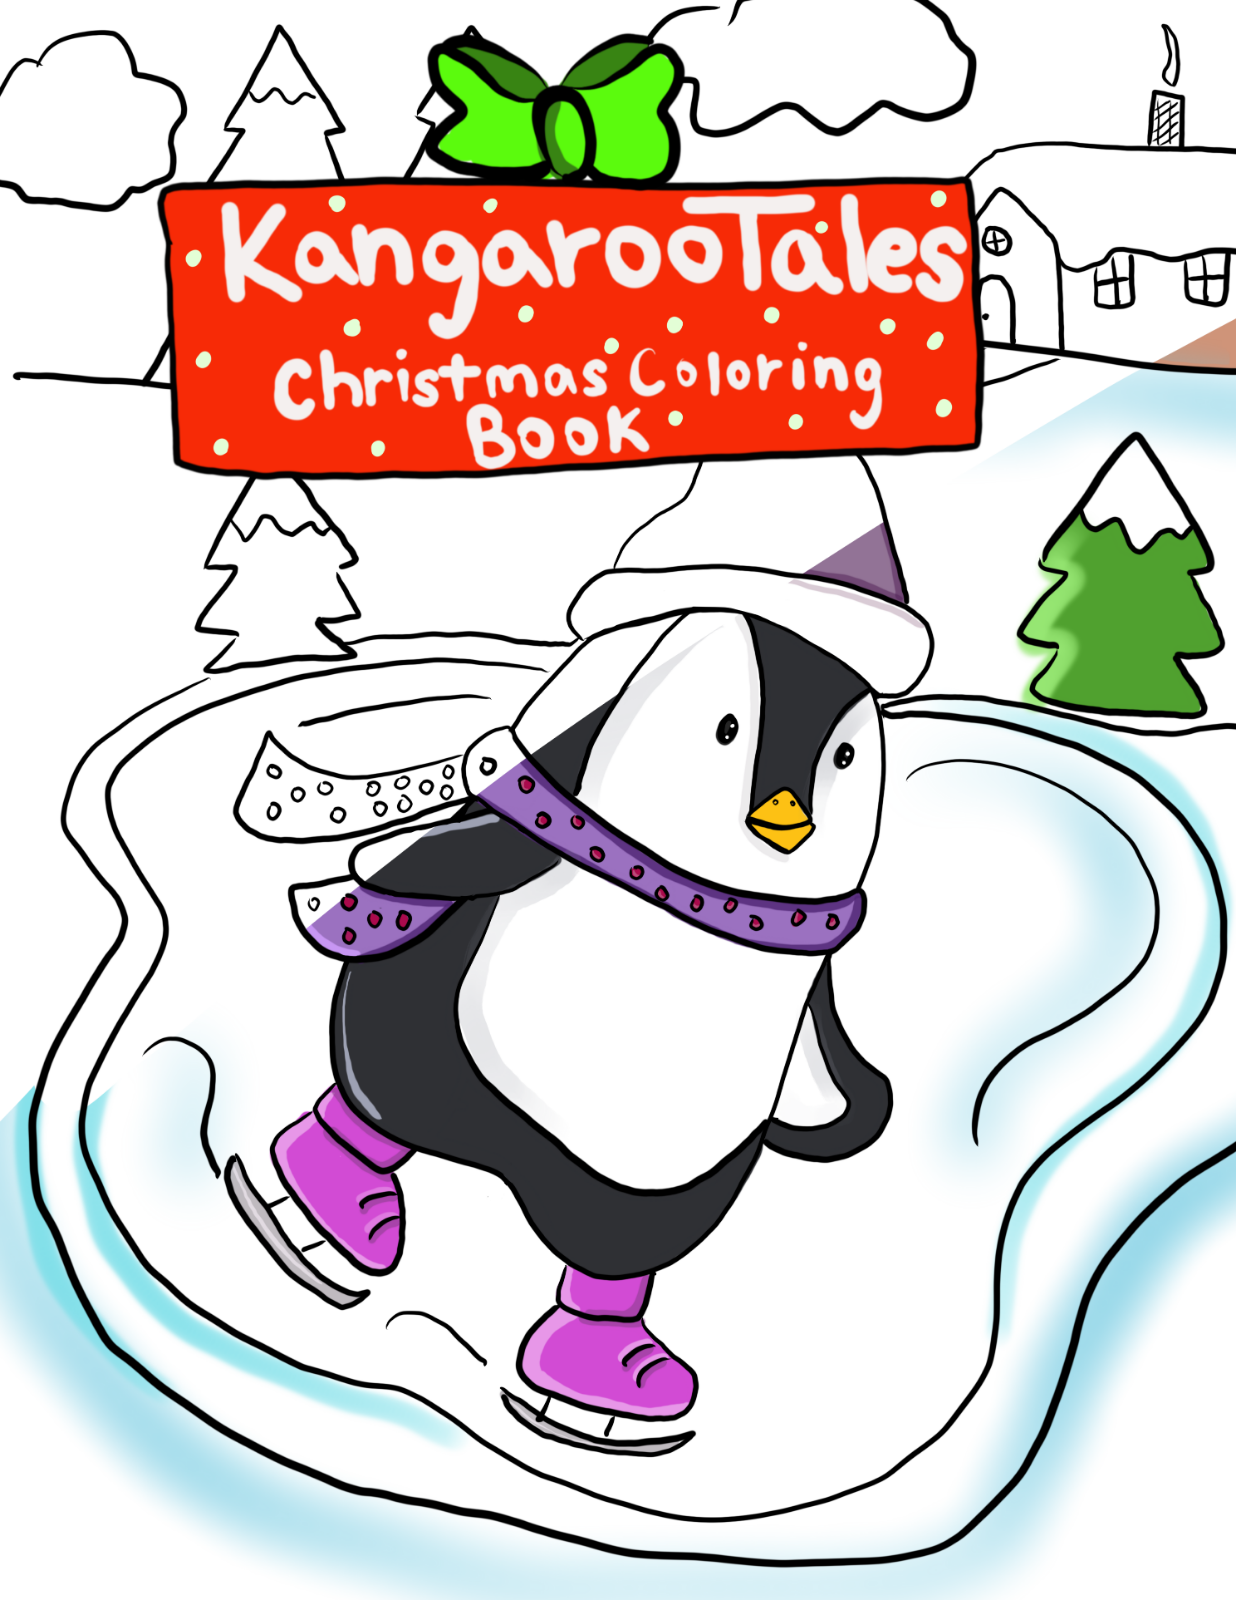 Kangaroo tales christmas loring book